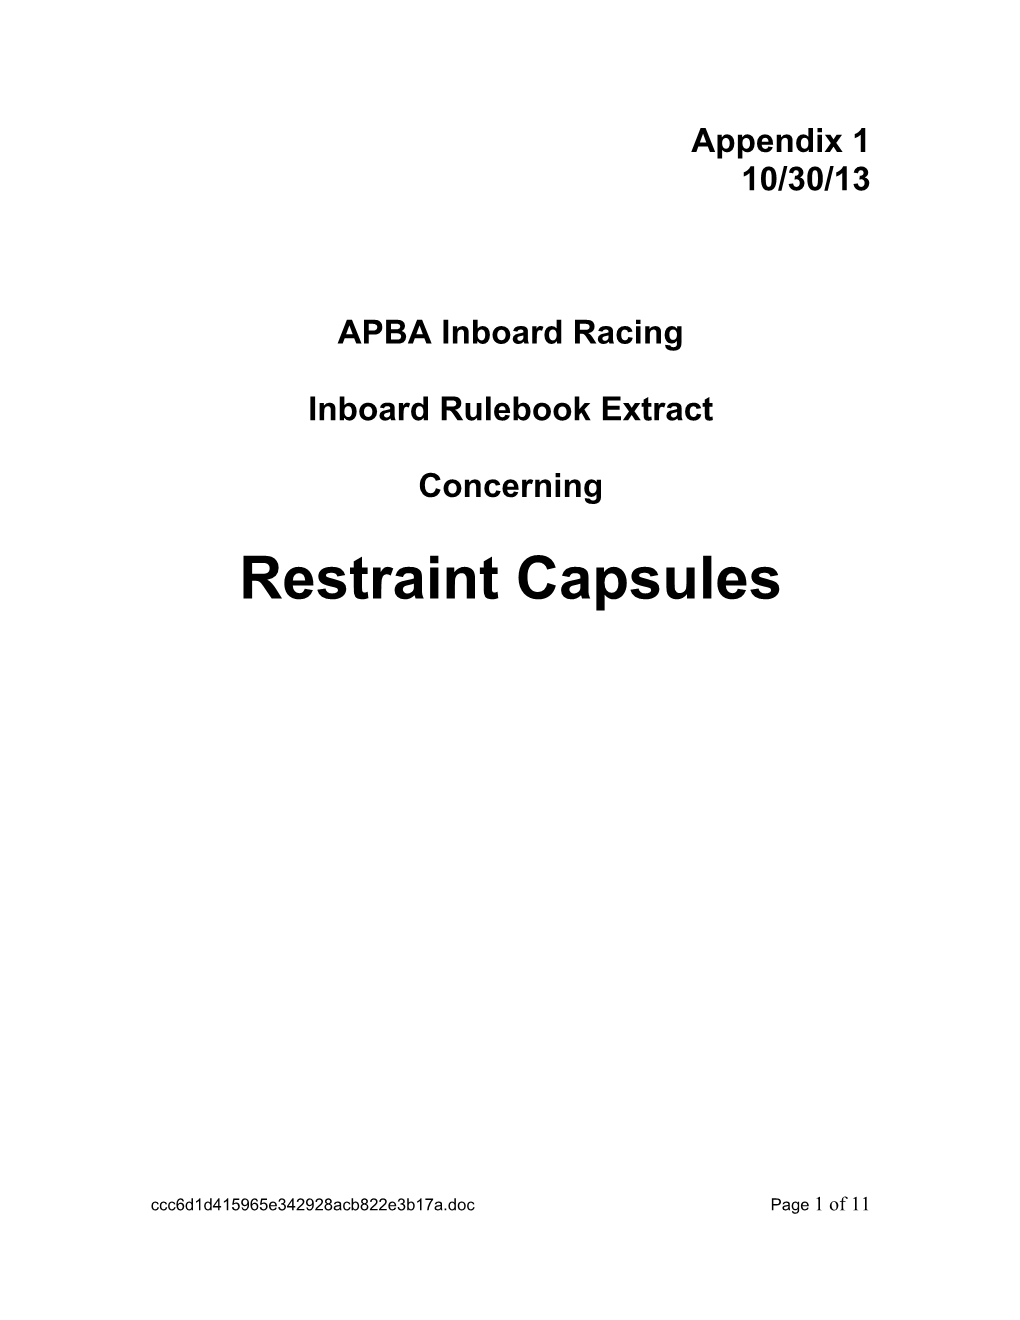 APBA Inboard Racing